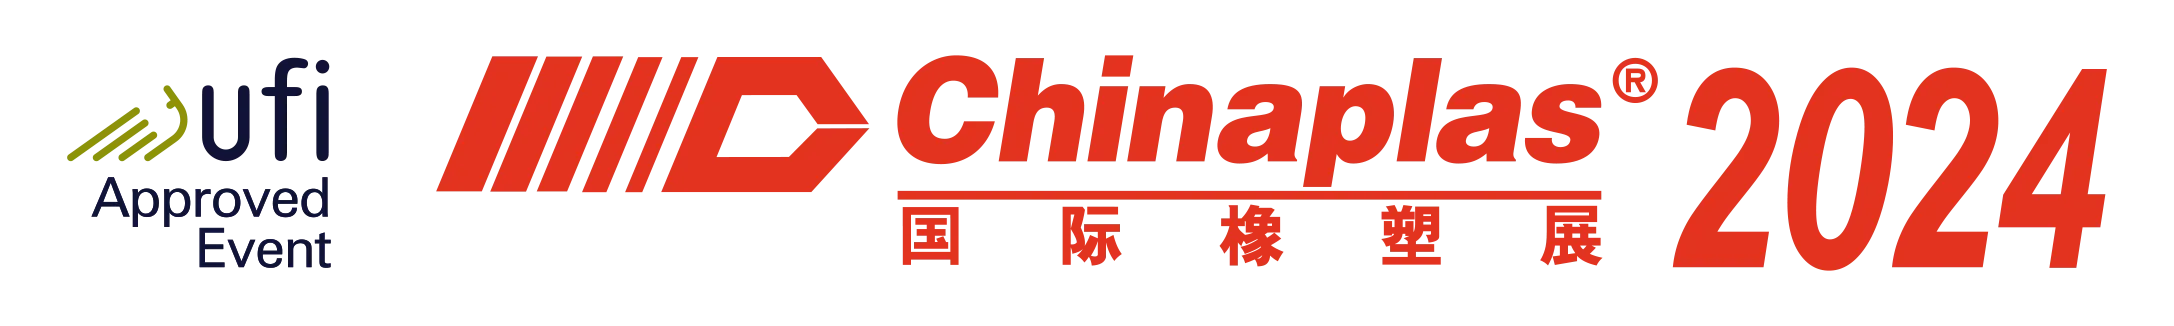 Chinaplas 2024